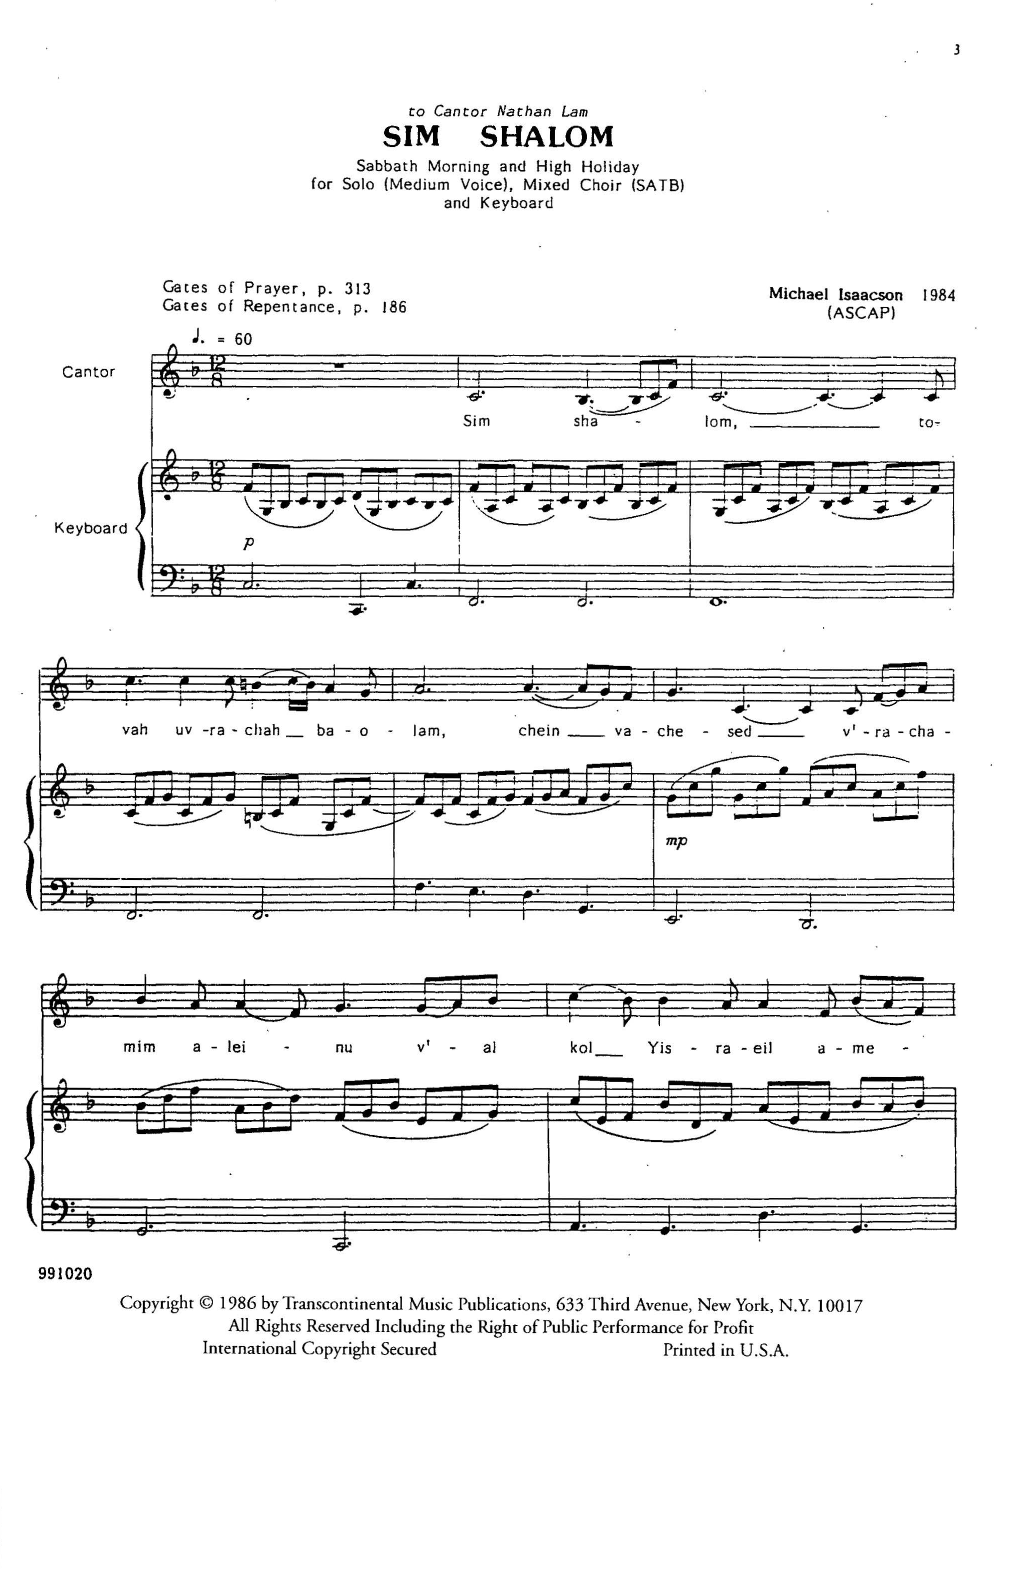 Michael Isaacson Sim Shalom (Grant Us Peace) Sheet Music Notes & Chords for SATB Choir - Download or Print PDF